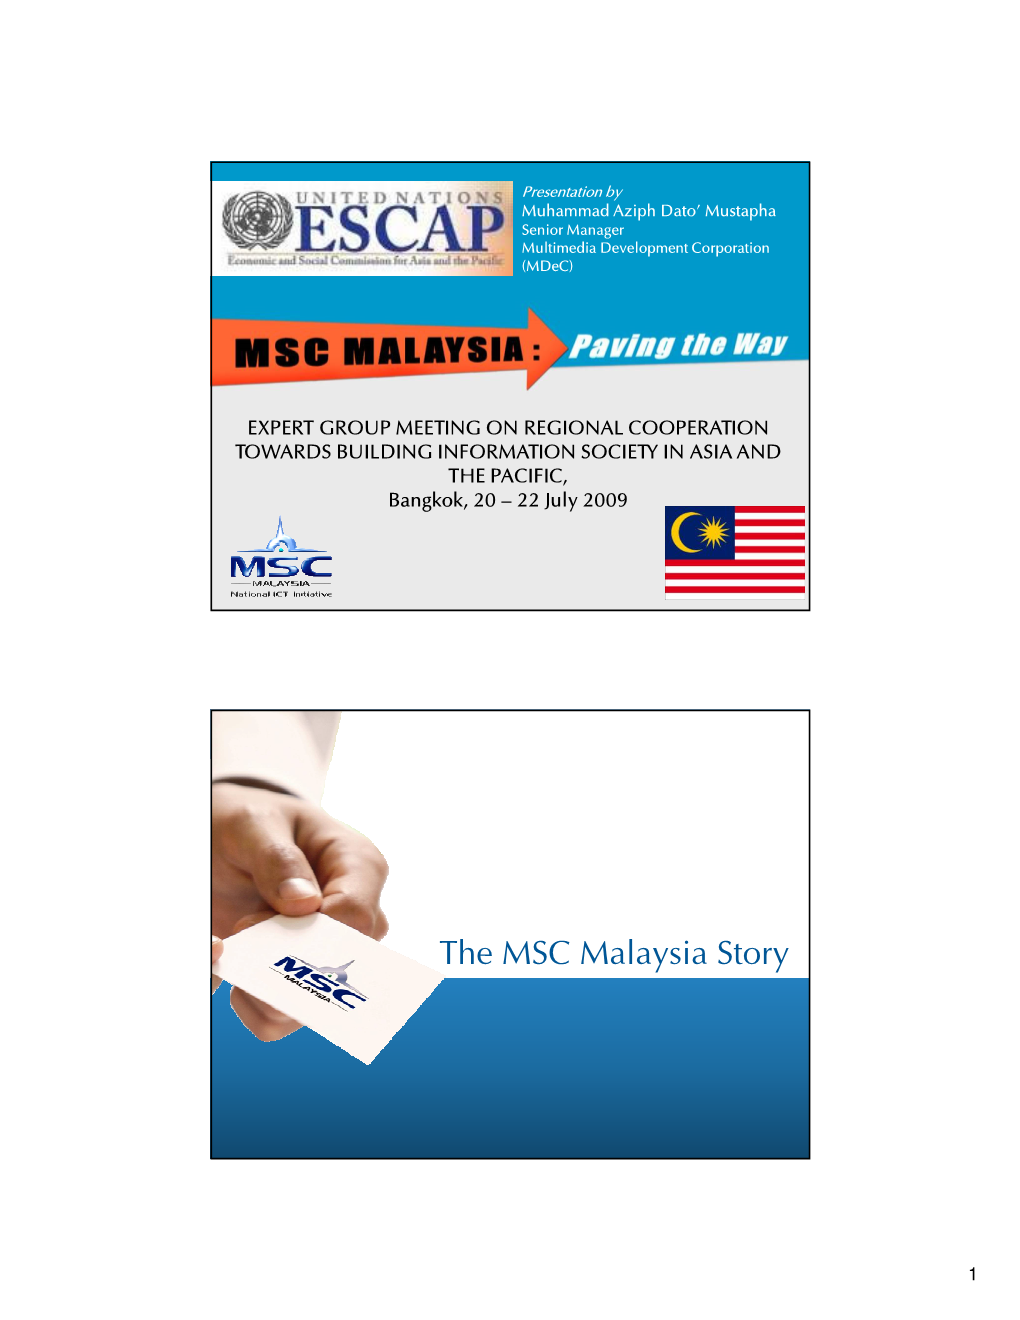 The MSC Malaysia Story